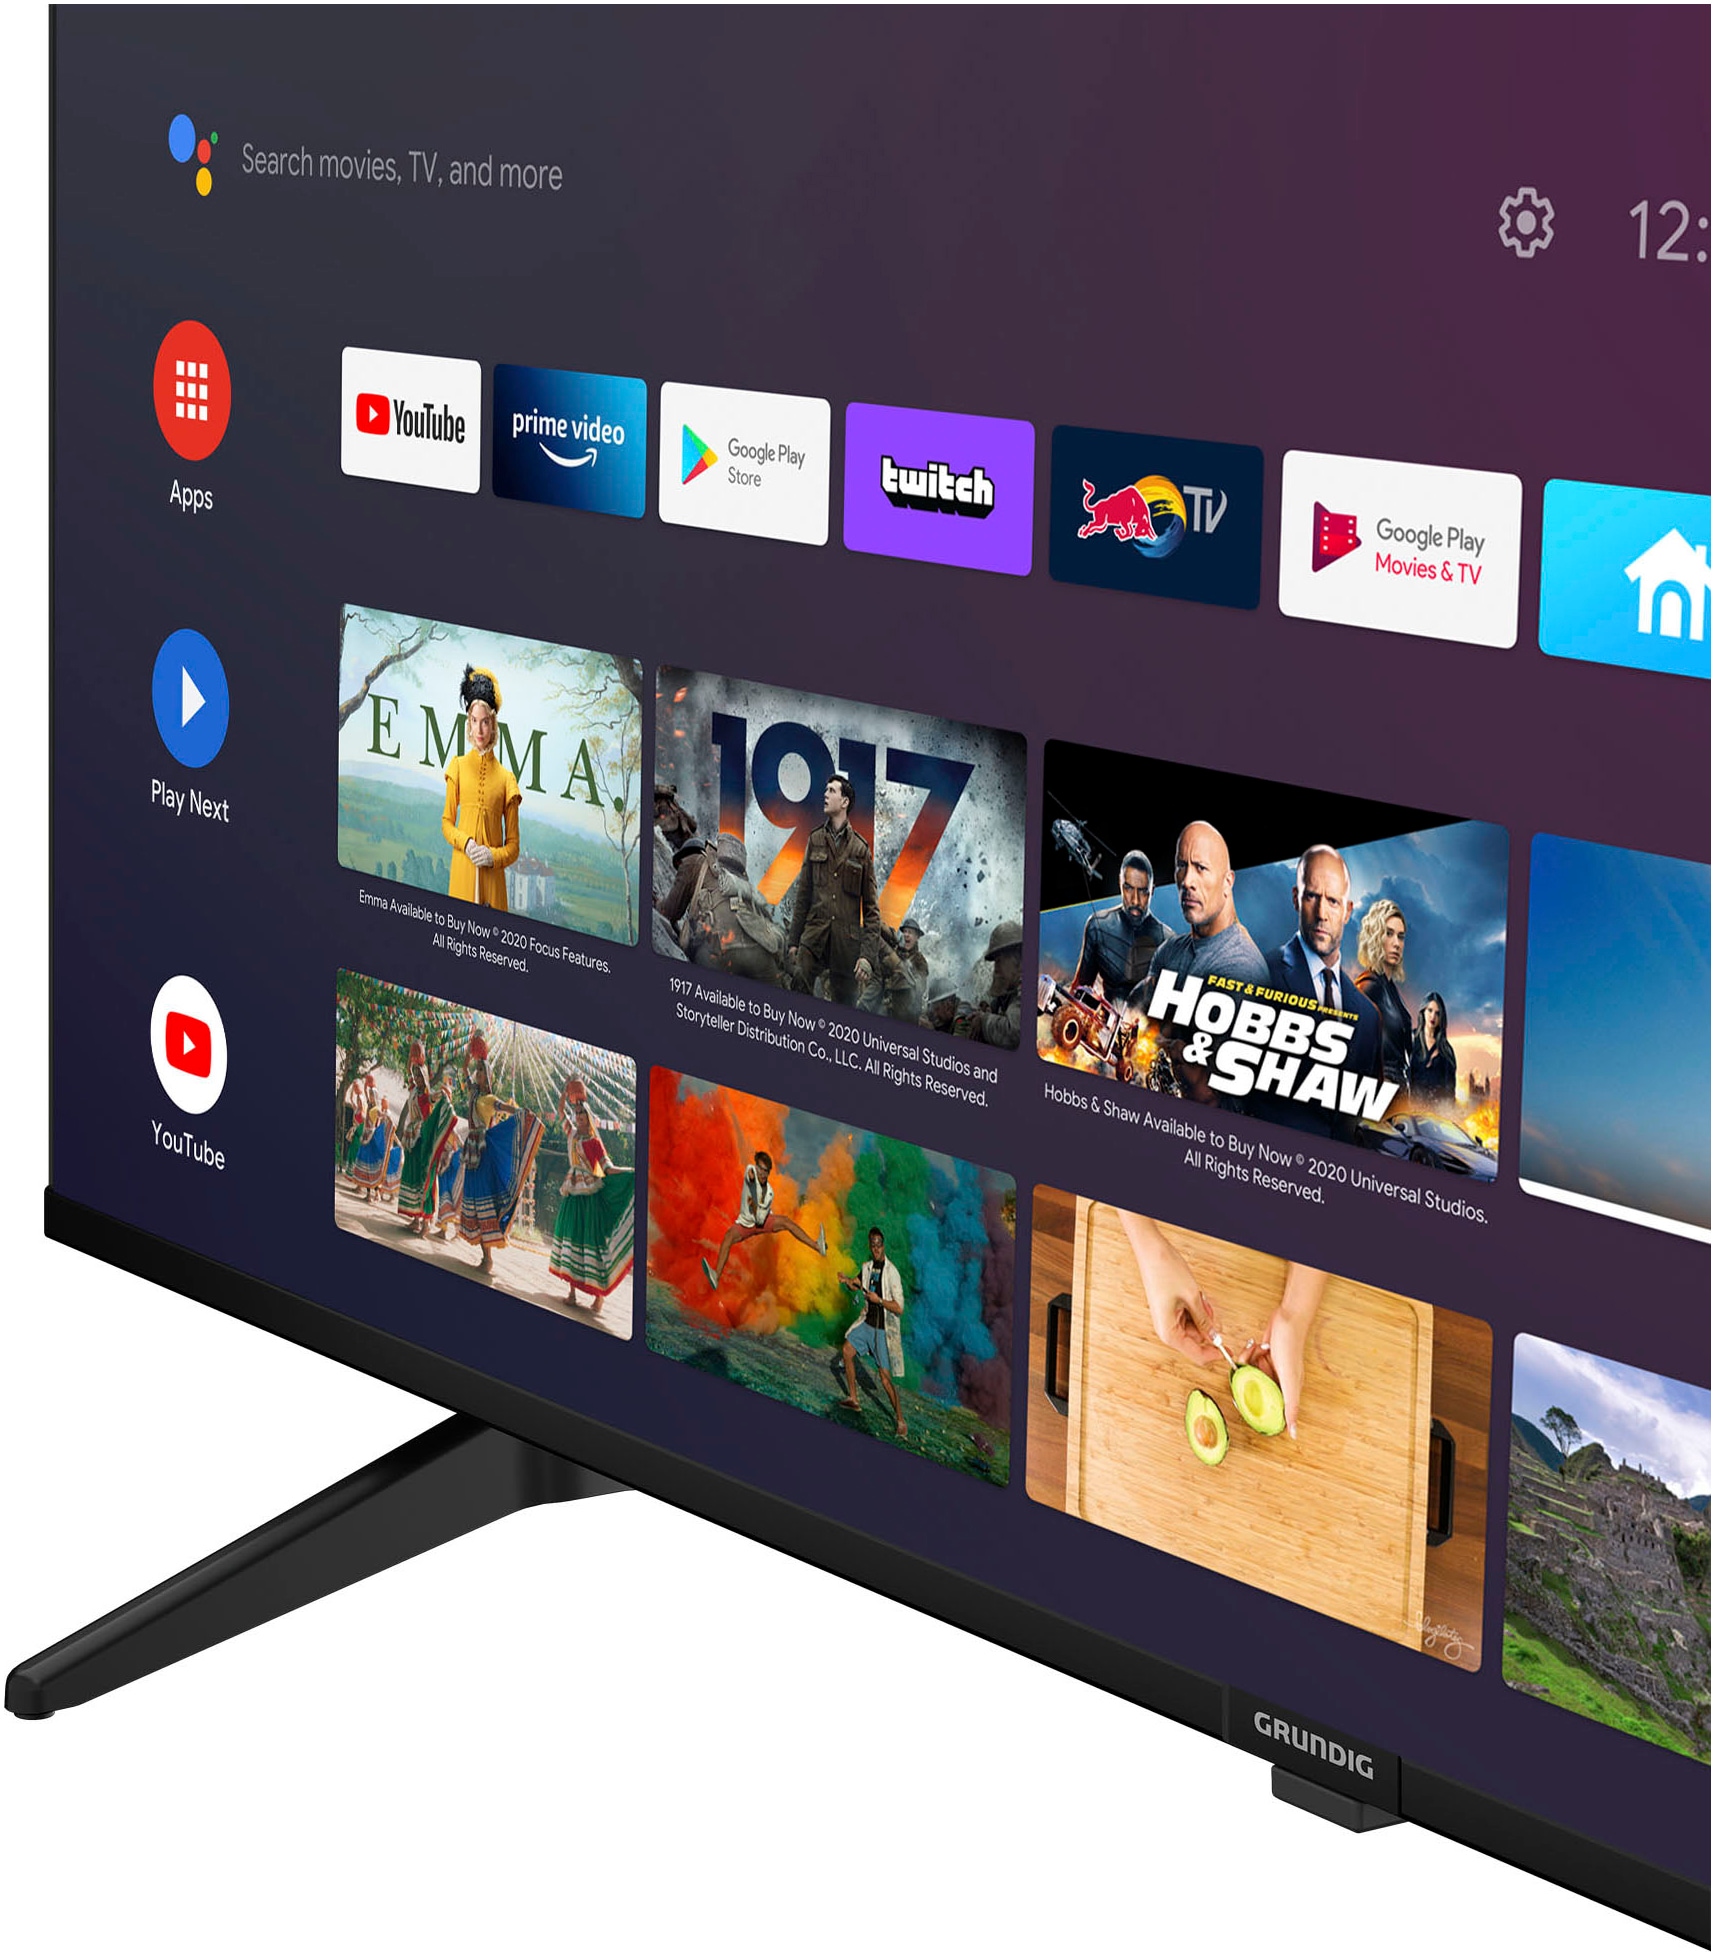 Grundig LED-Fernseher, 108 cm/43 Zoll, 4K Ultra HD, Android TV